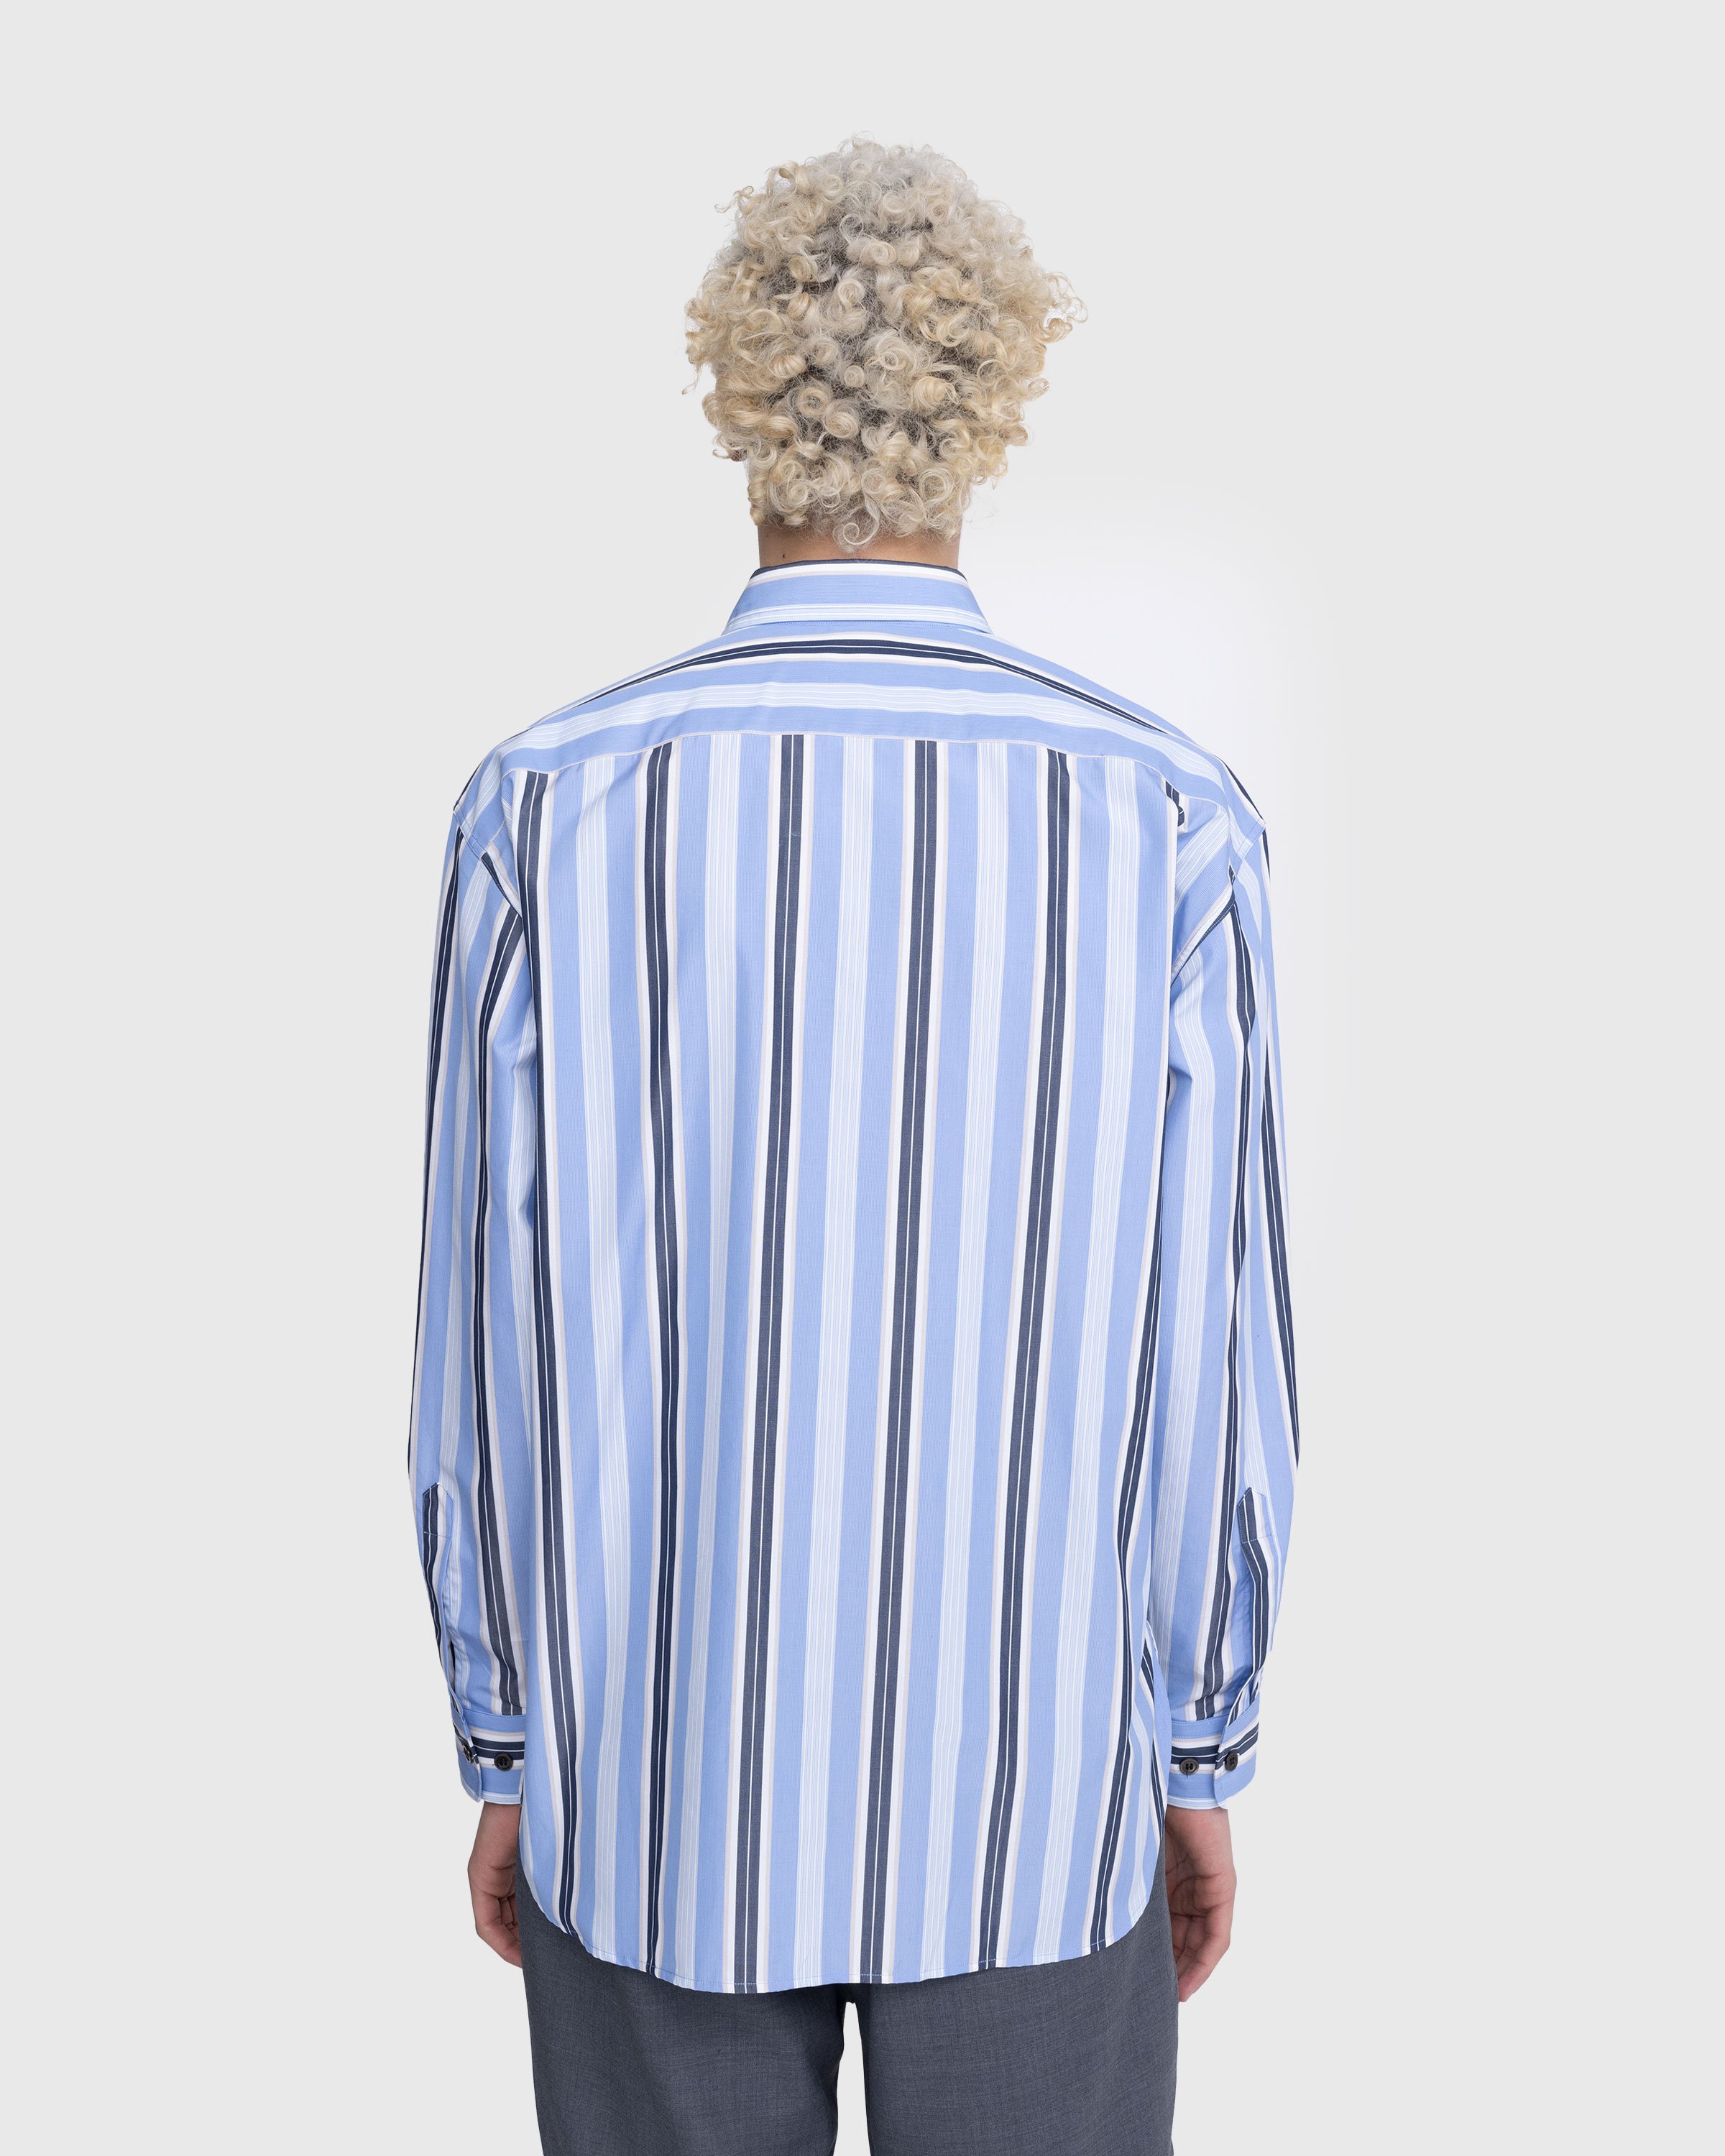 Dries van Noten - Croom Shirt Light Blue - Clothing - Blue - Image 3